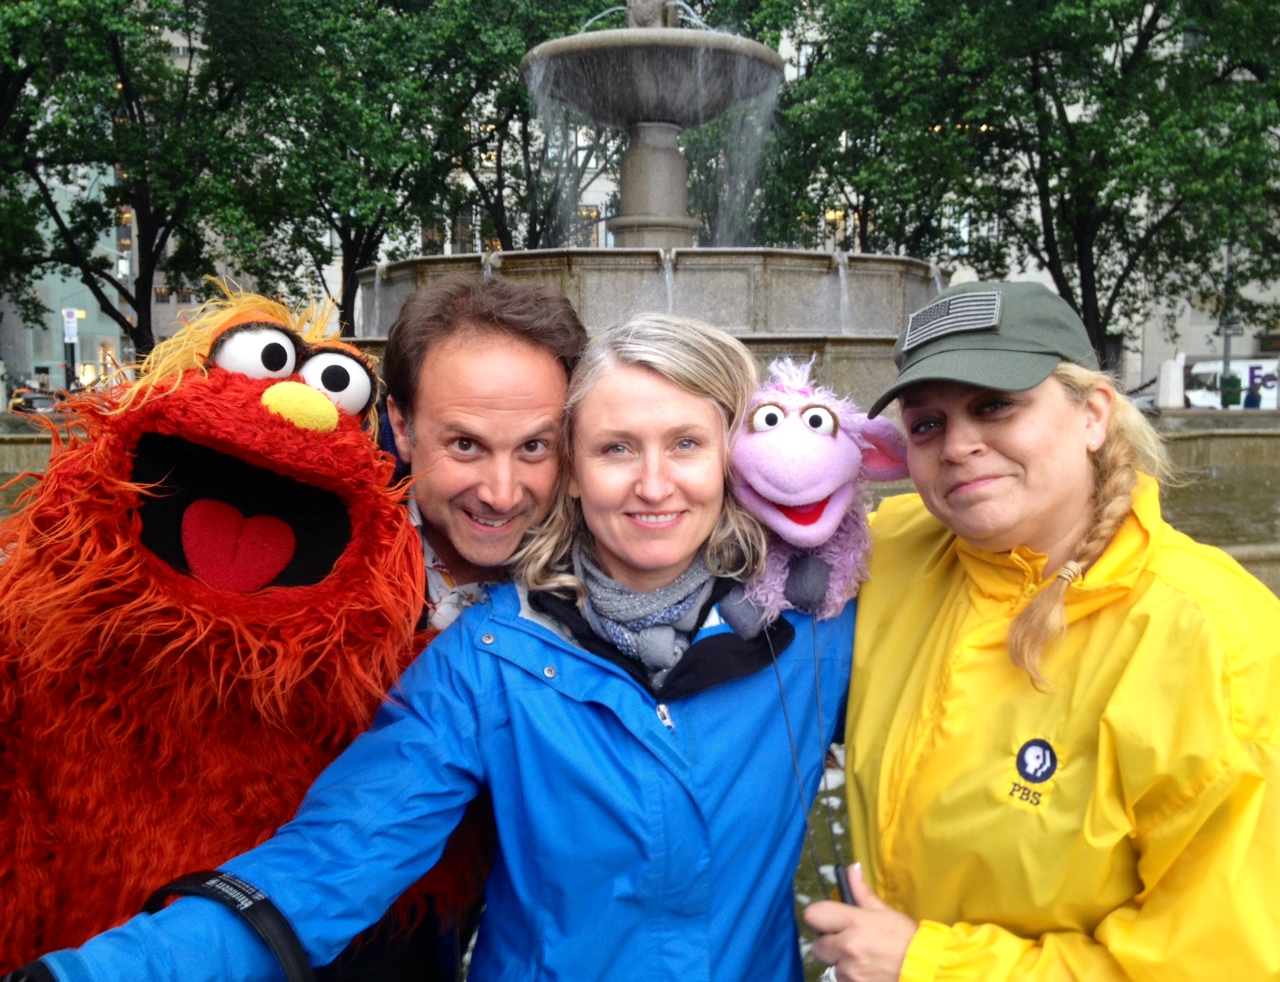 With Murray Monster, Joey Mazzarino, Ovajita and Carmen Osbahr. On location for Sesame Street 